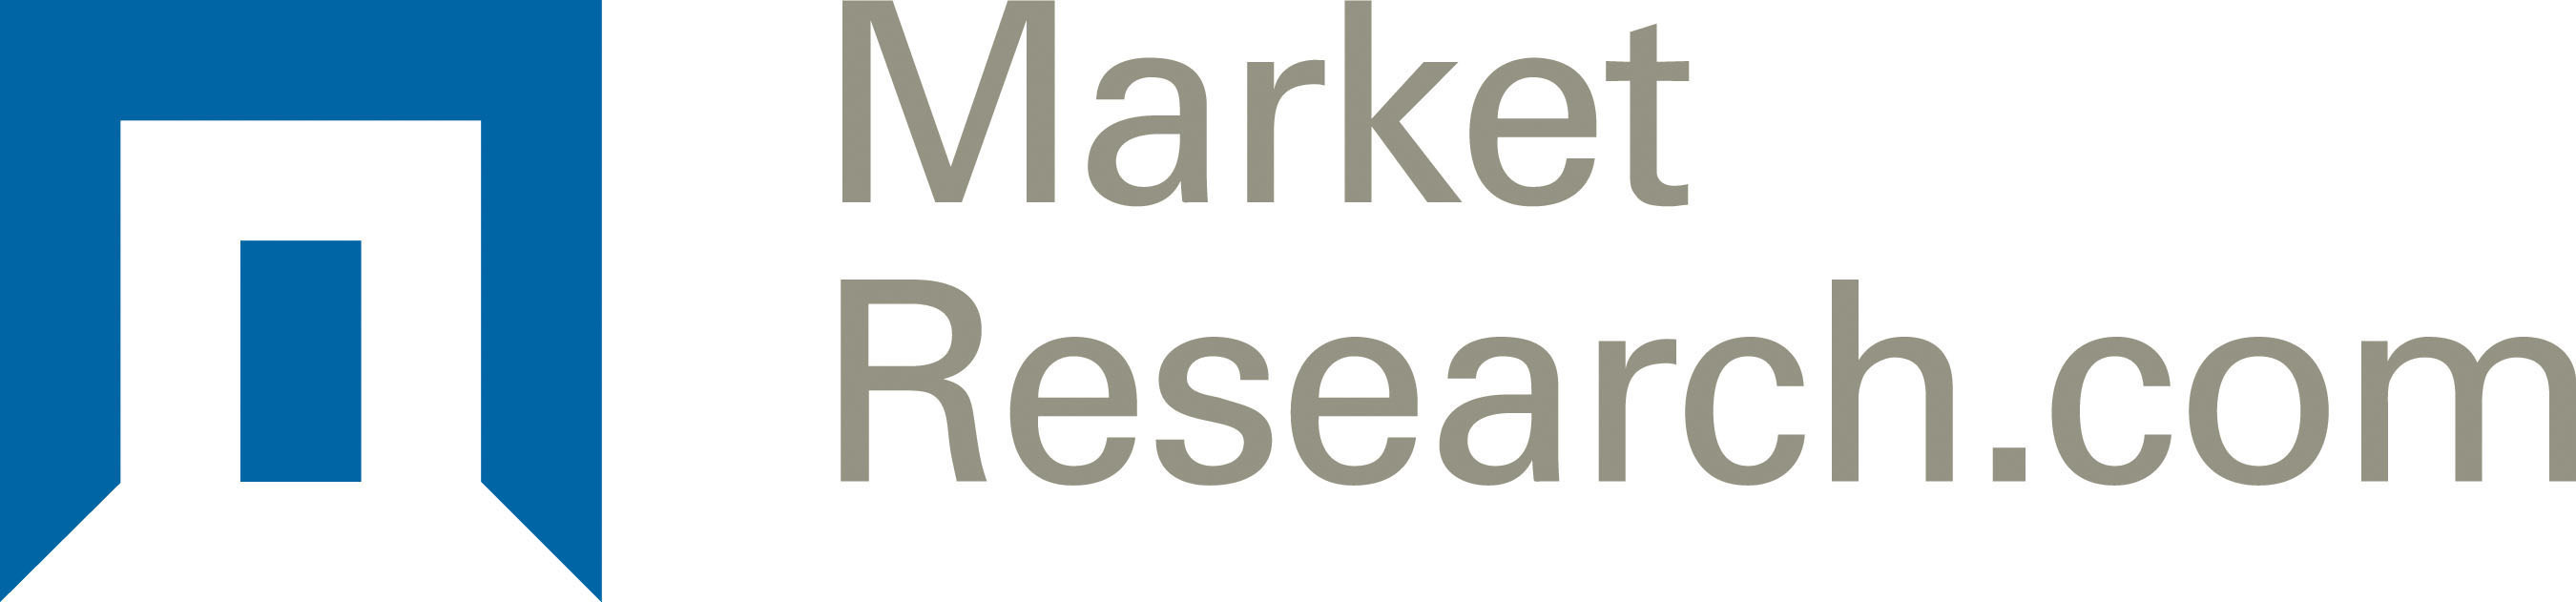 MarketResearch.com Logo